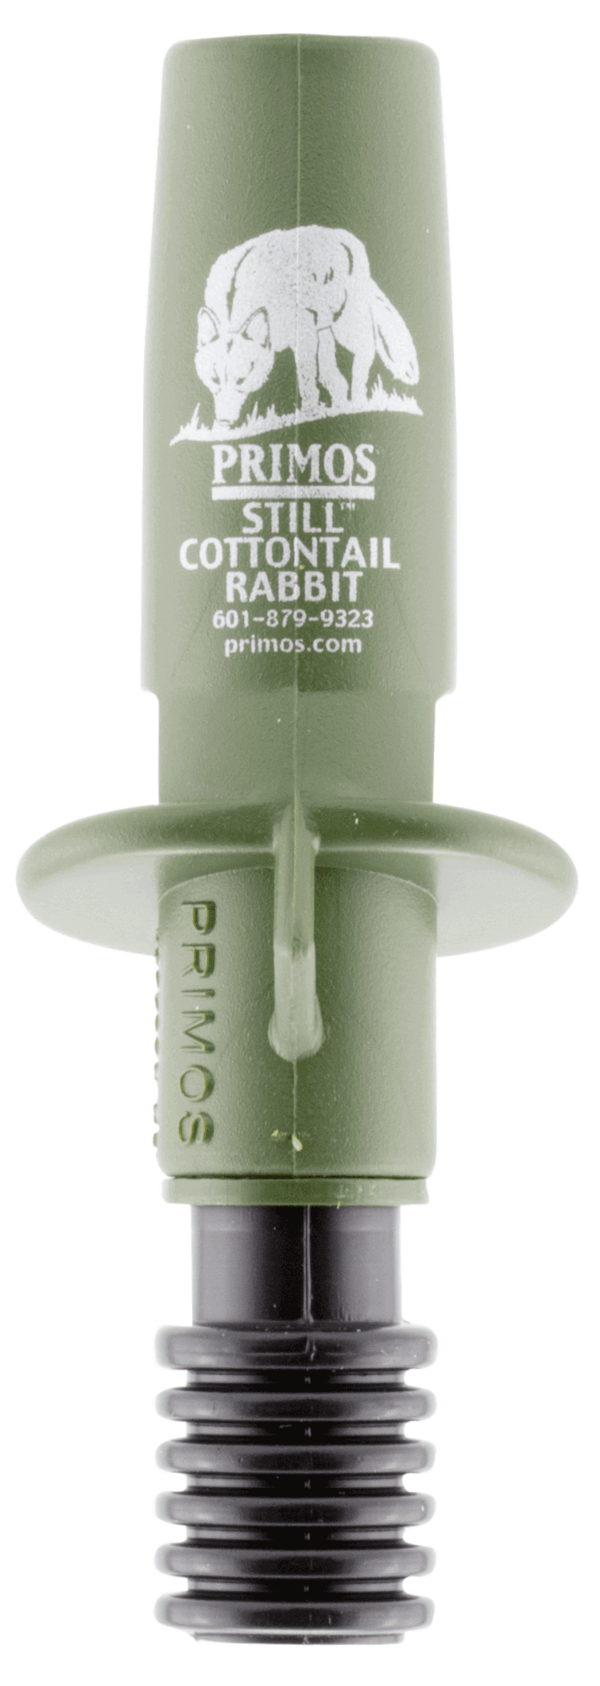 Primos 316 Still Cottontail Rabbit